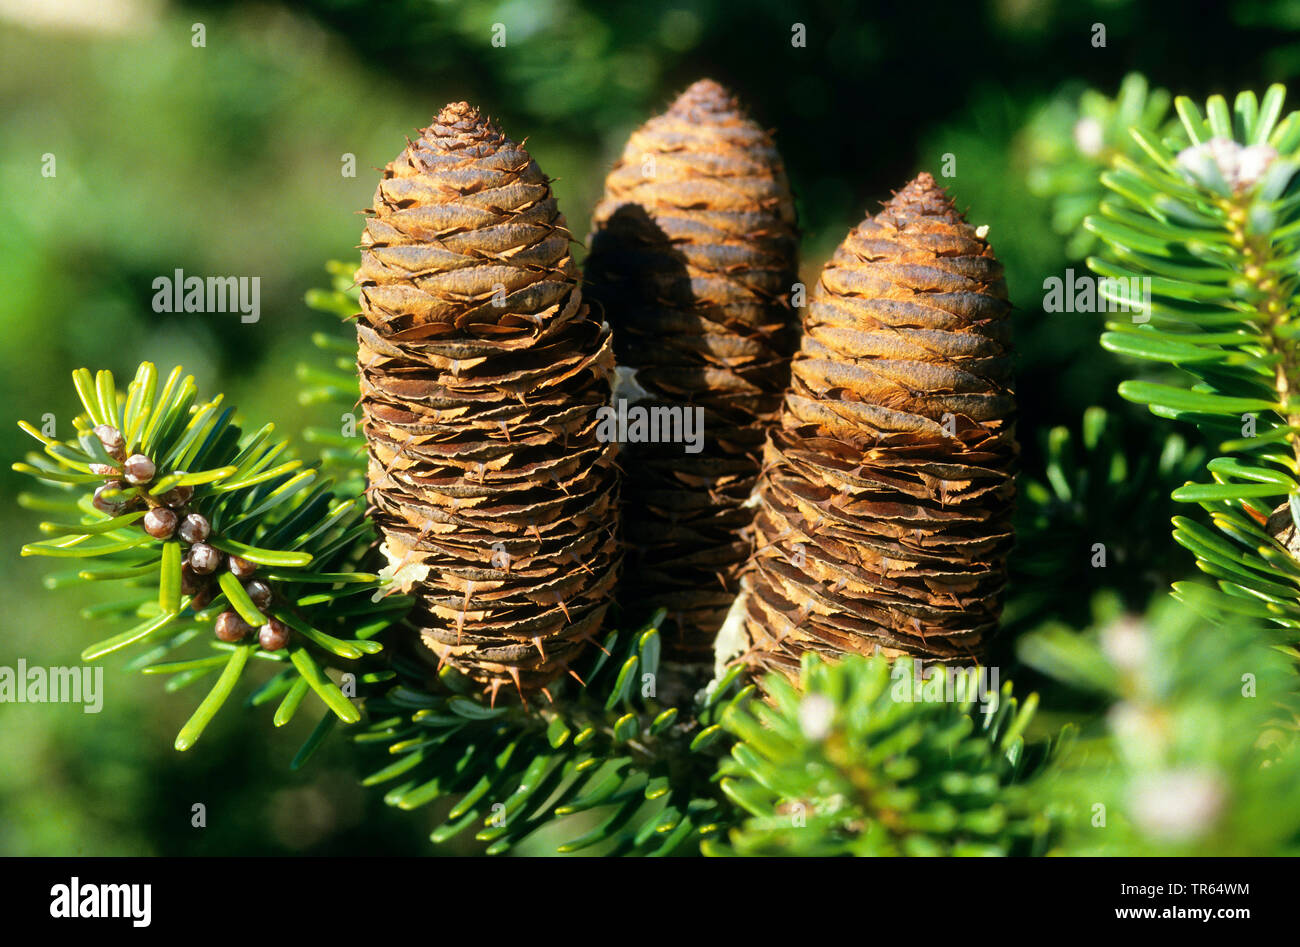 Korean fir (Abies koreana), branches with cones Stock Photo